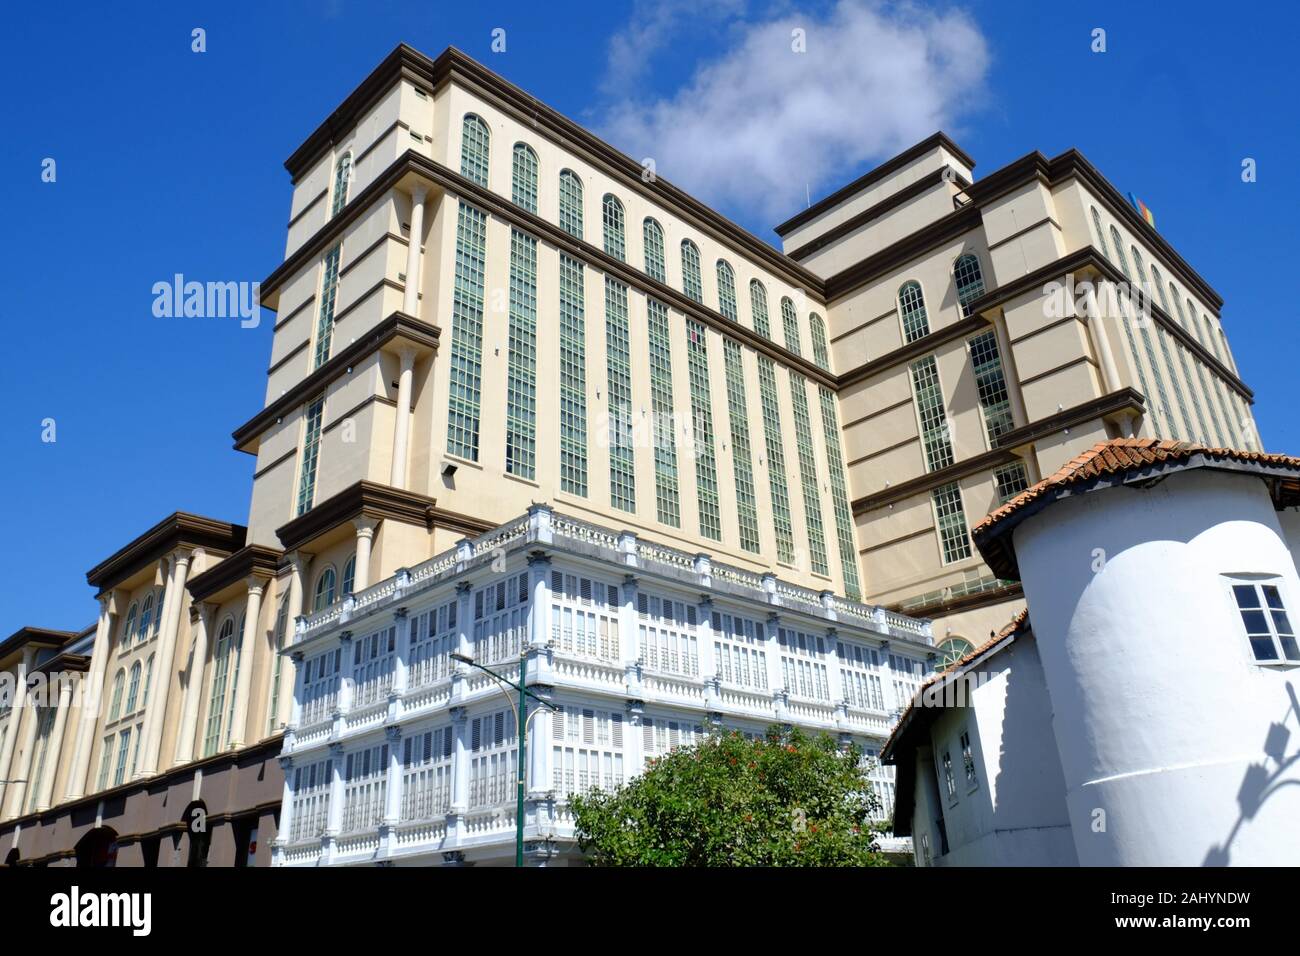 Hotel merdeka kuching sarawak hi-res stock photography and images pic picture image